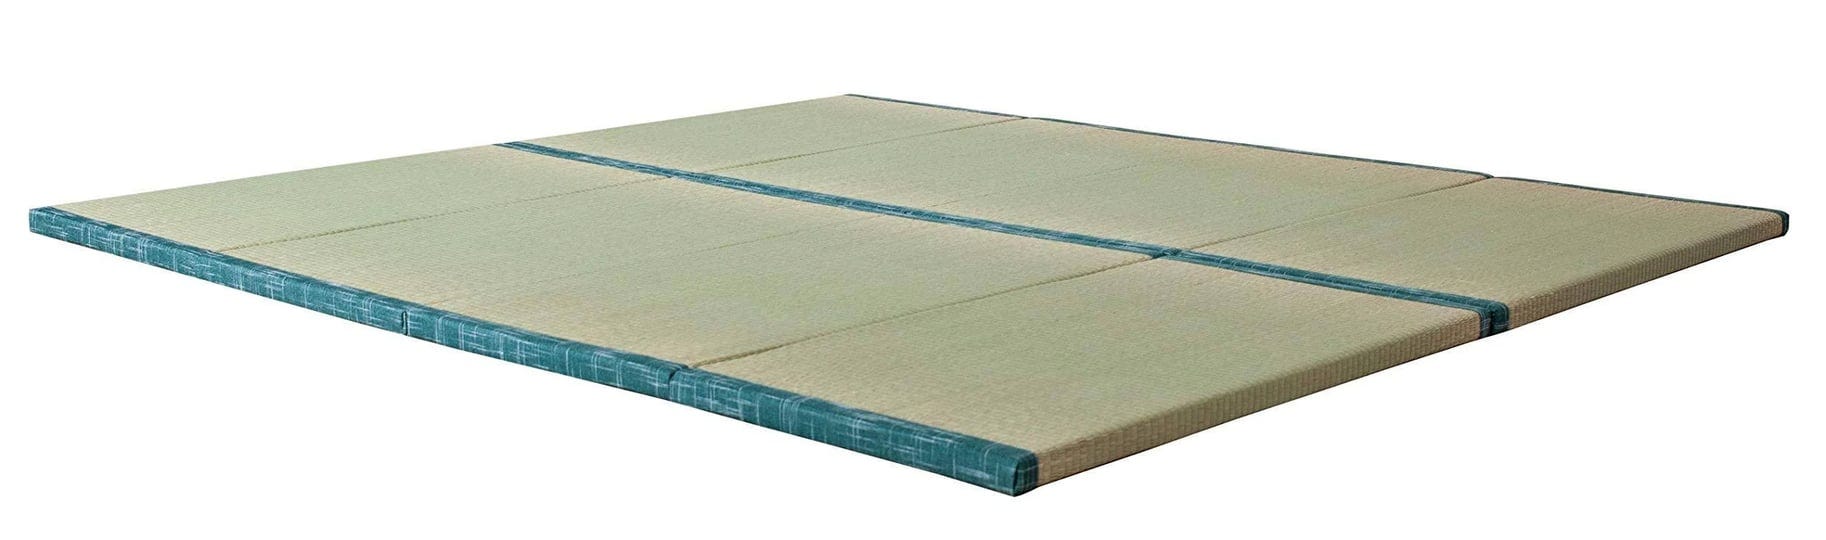 mustmat-tatami-futon-mattress-traditional-japanese-tatami-mat-comfortable-japanese-tatami-bed-rush-g-1